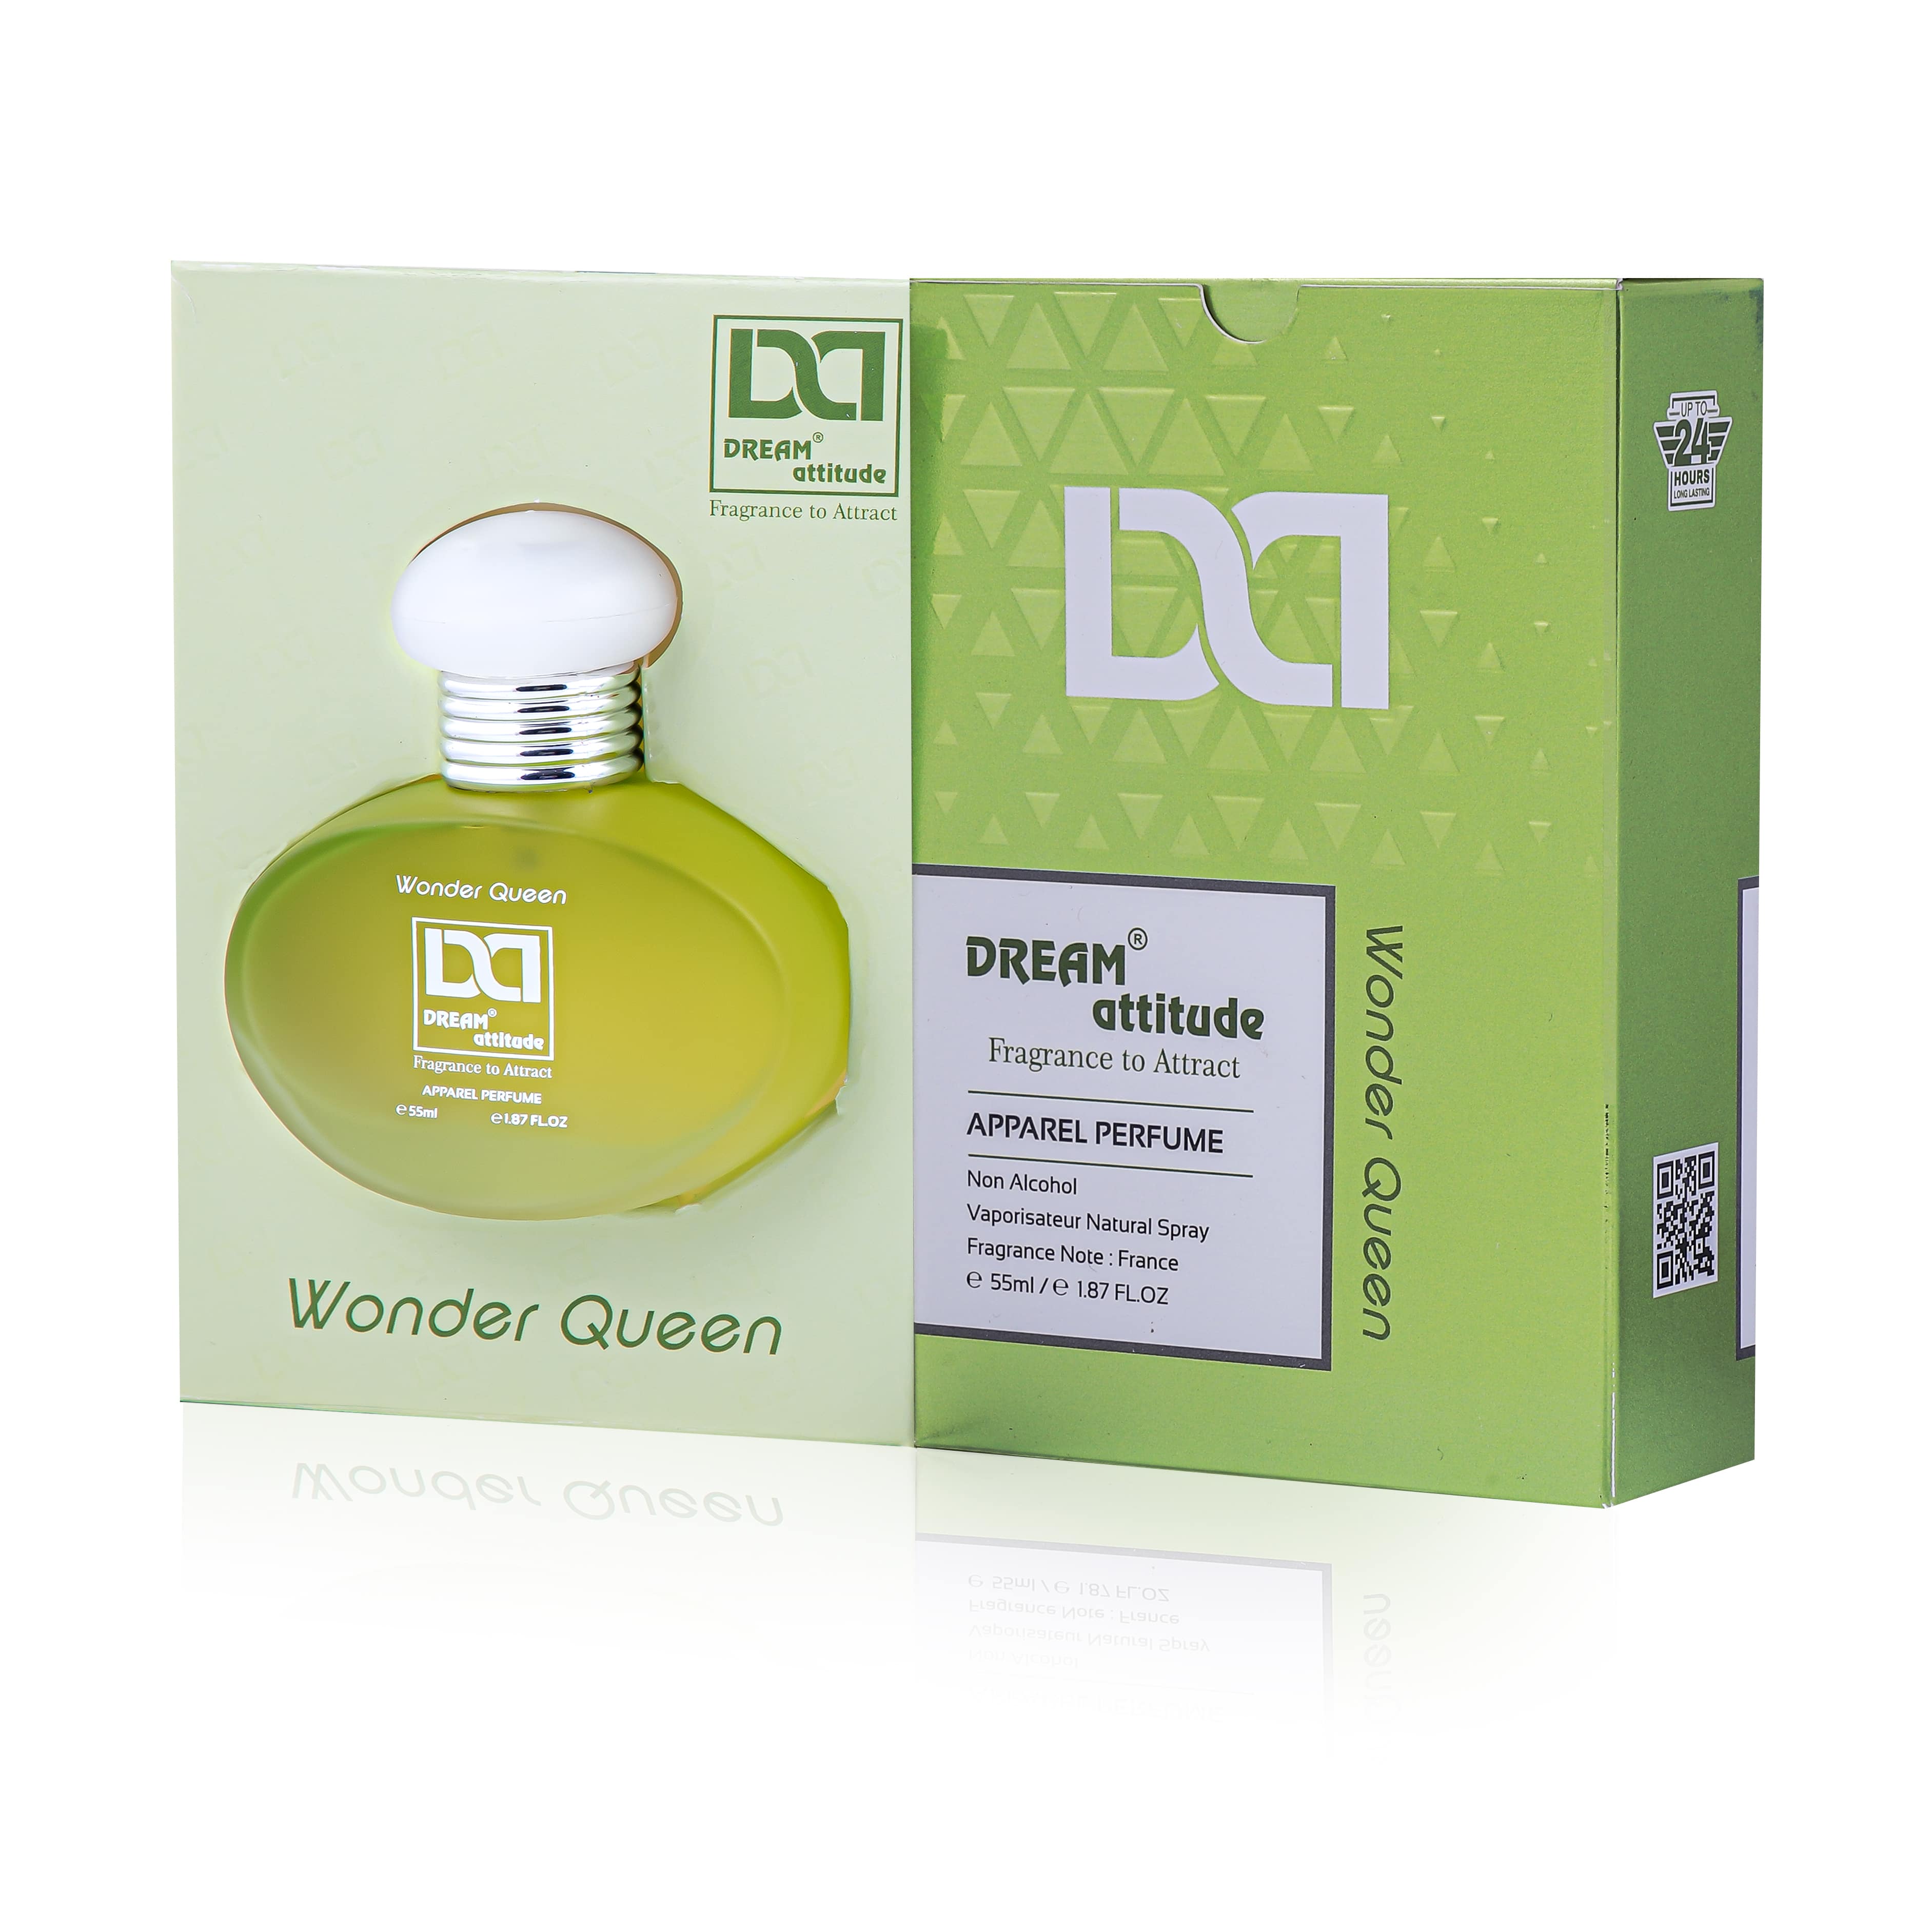 DREAM attitude Wonder Queen Perfume: Majestic Allure and Royal Signature